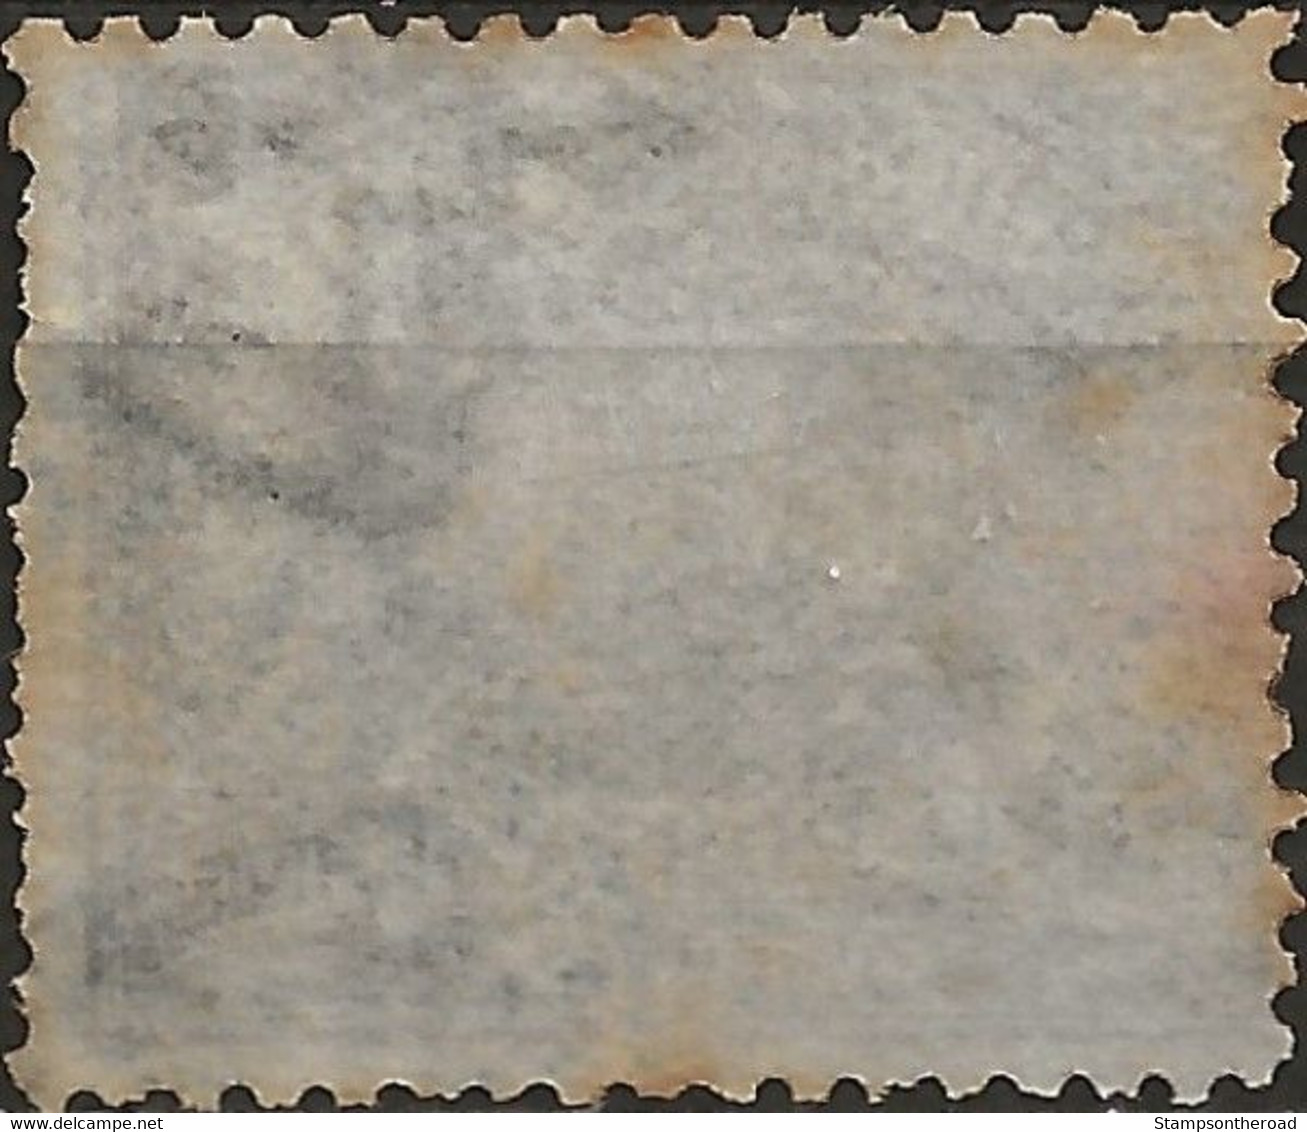 SM17U - San Marino 1892/94, Sassone Nr. 17, 40 Cent. Bruno - Oblitérés